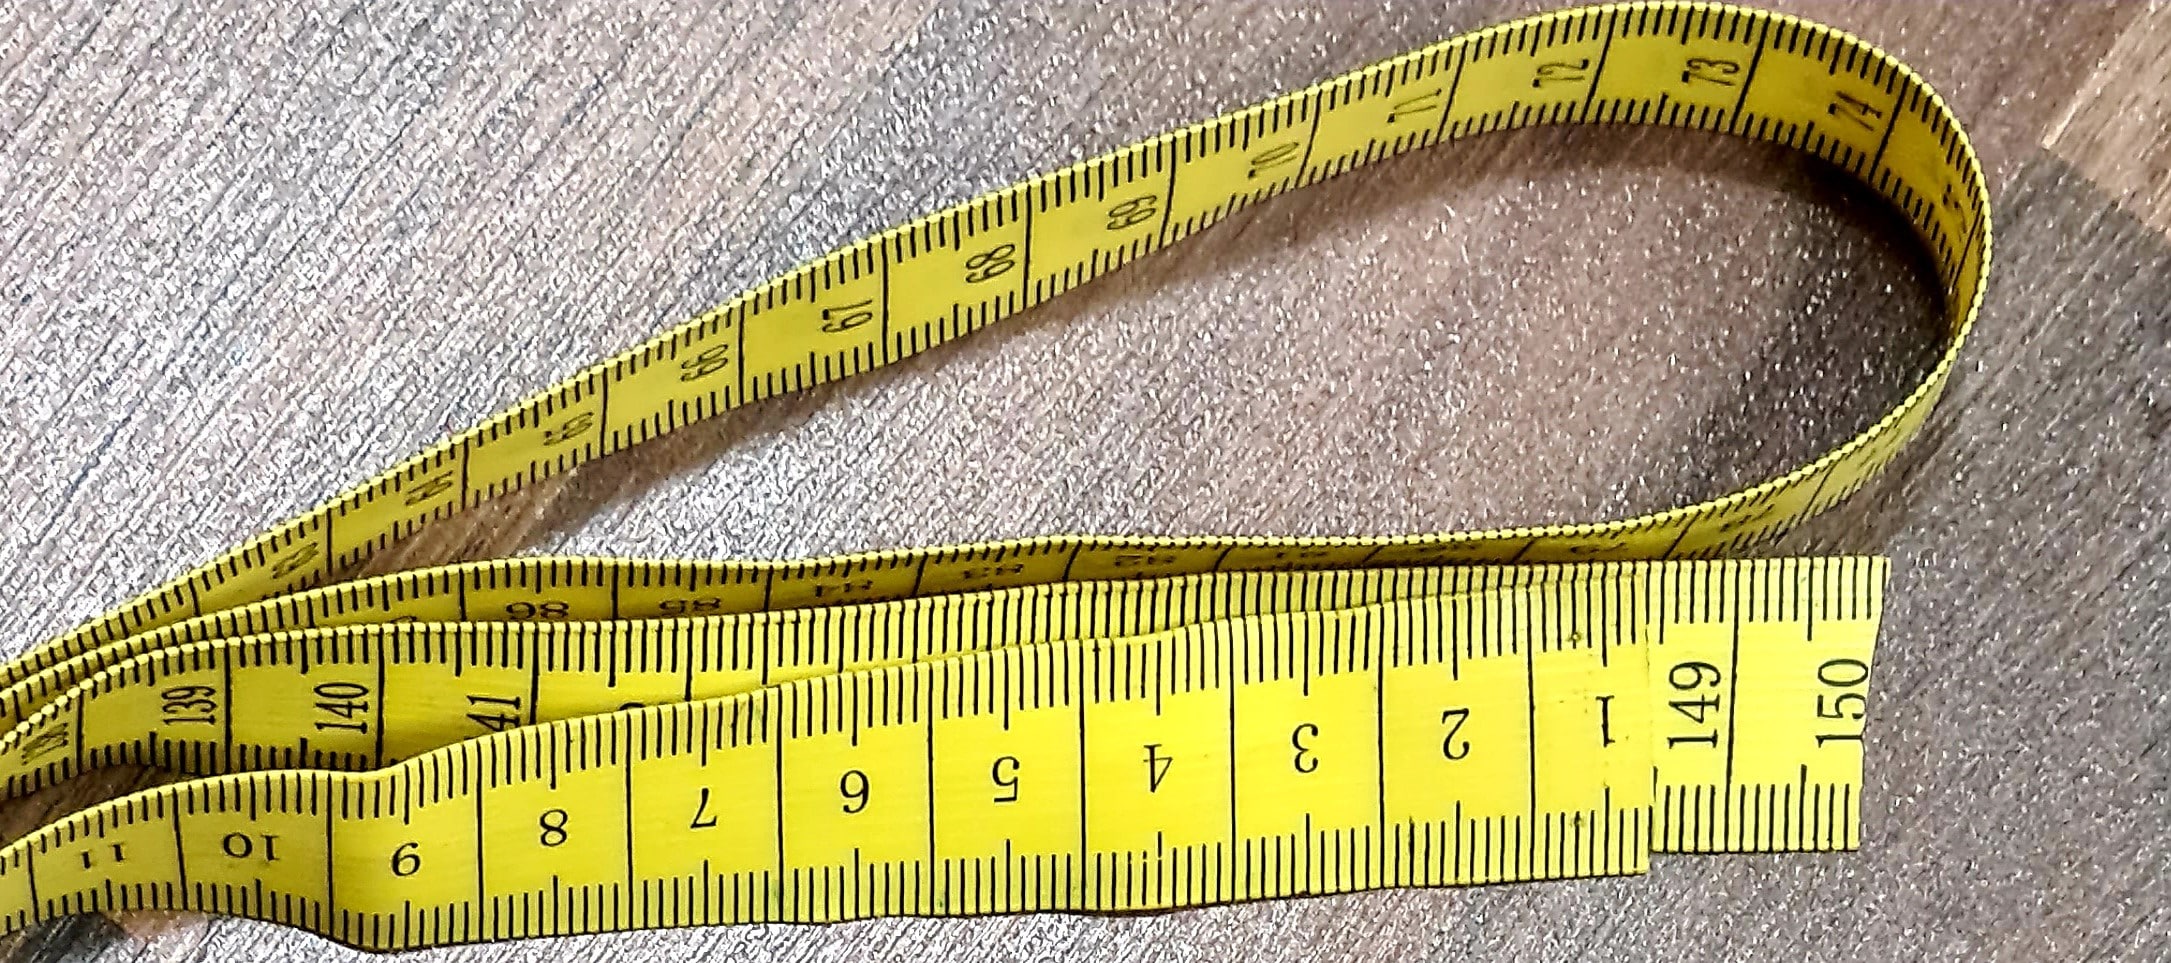 measuring tape to determine body sizes